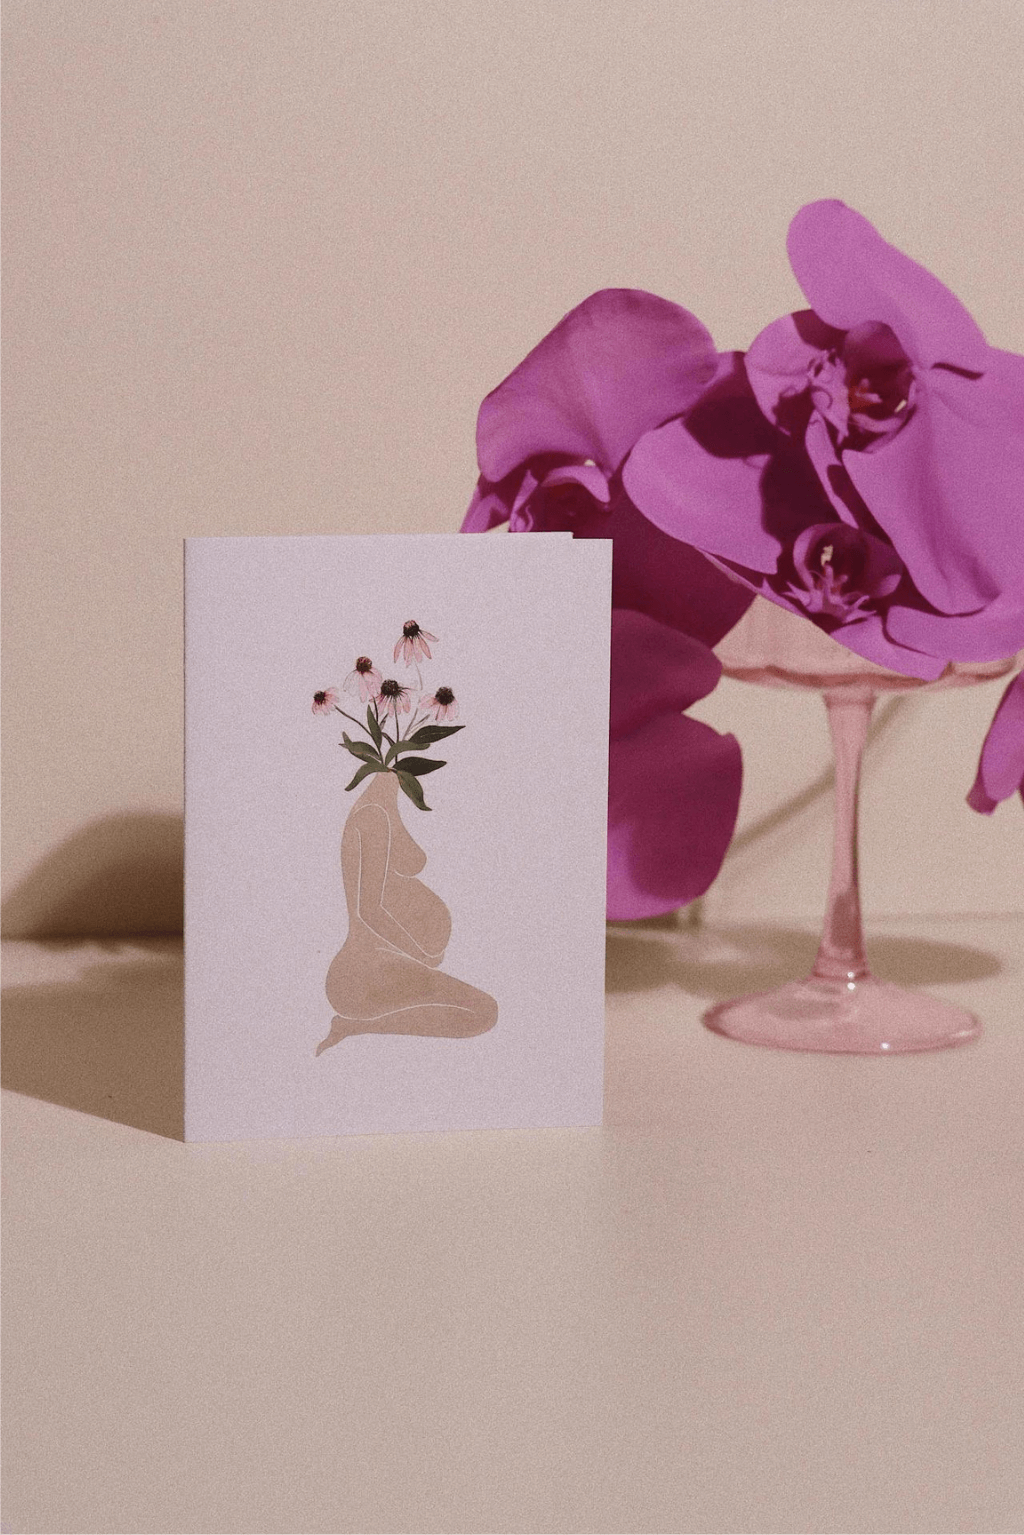 Card - in full bloom